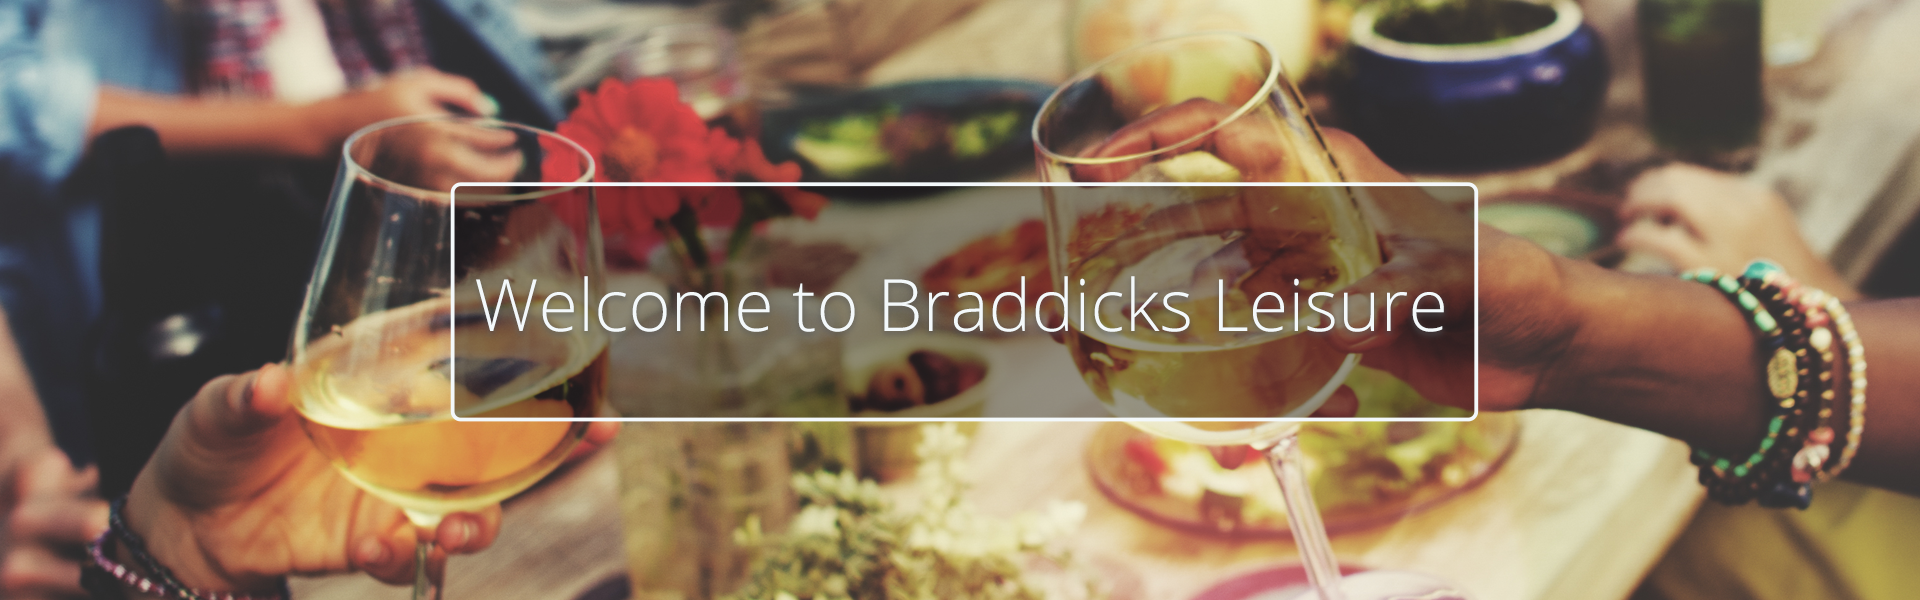 welcome to braddicks lesiure